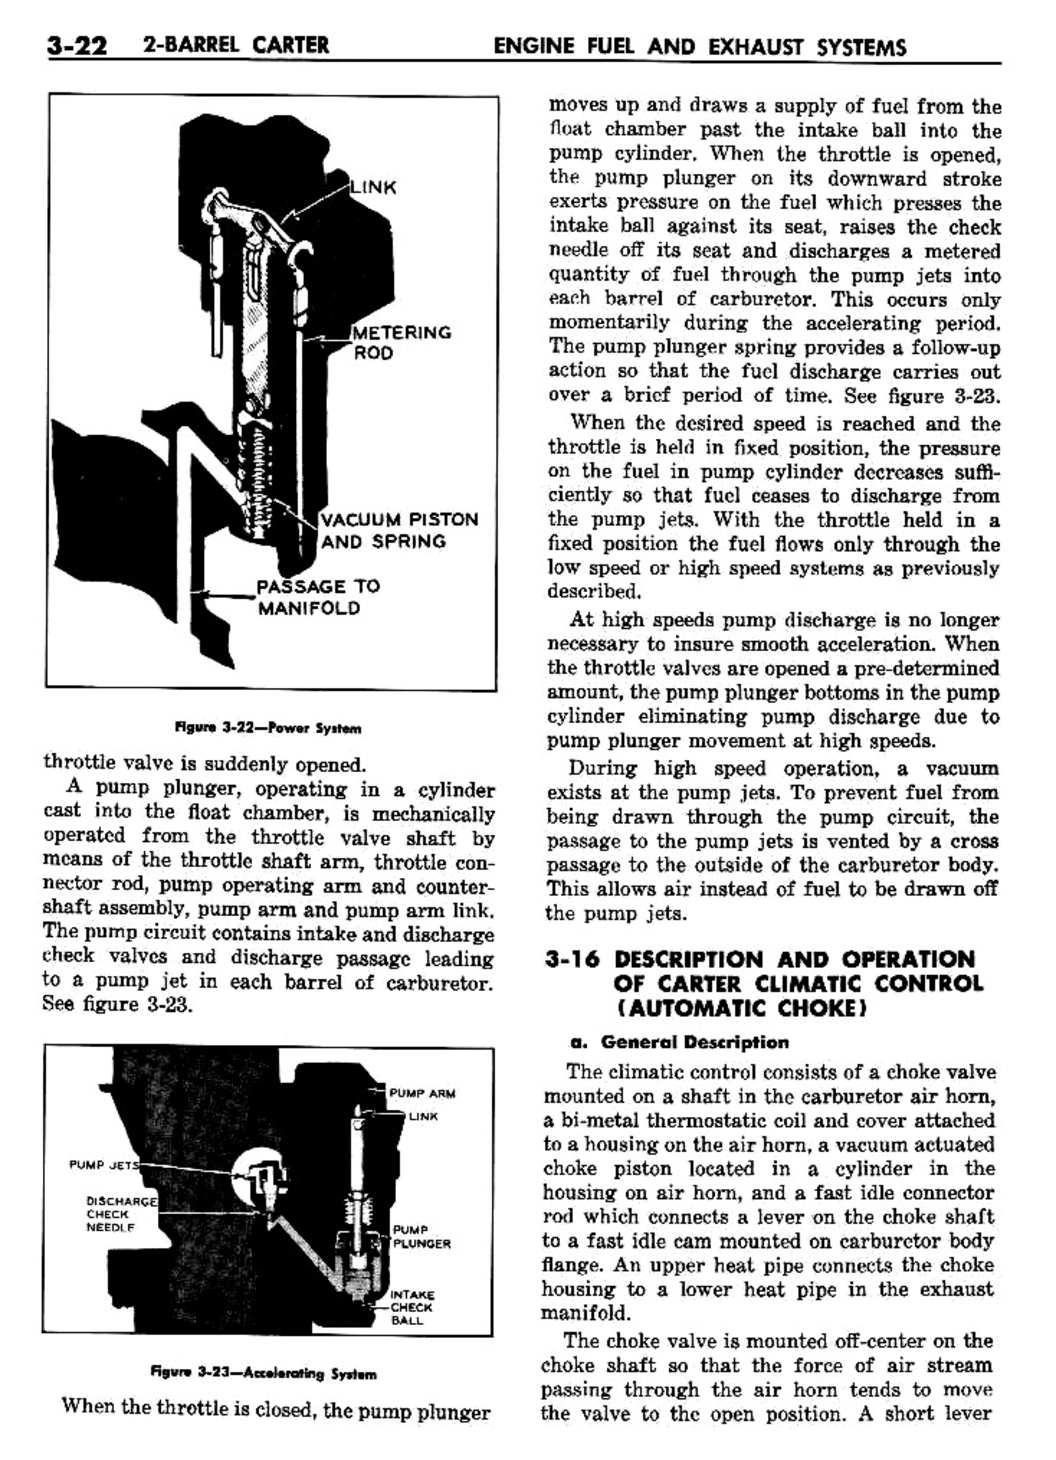 n_04 1957 Buick Shop Manual - Engine Fuel & Exhaust-022-022.jpg